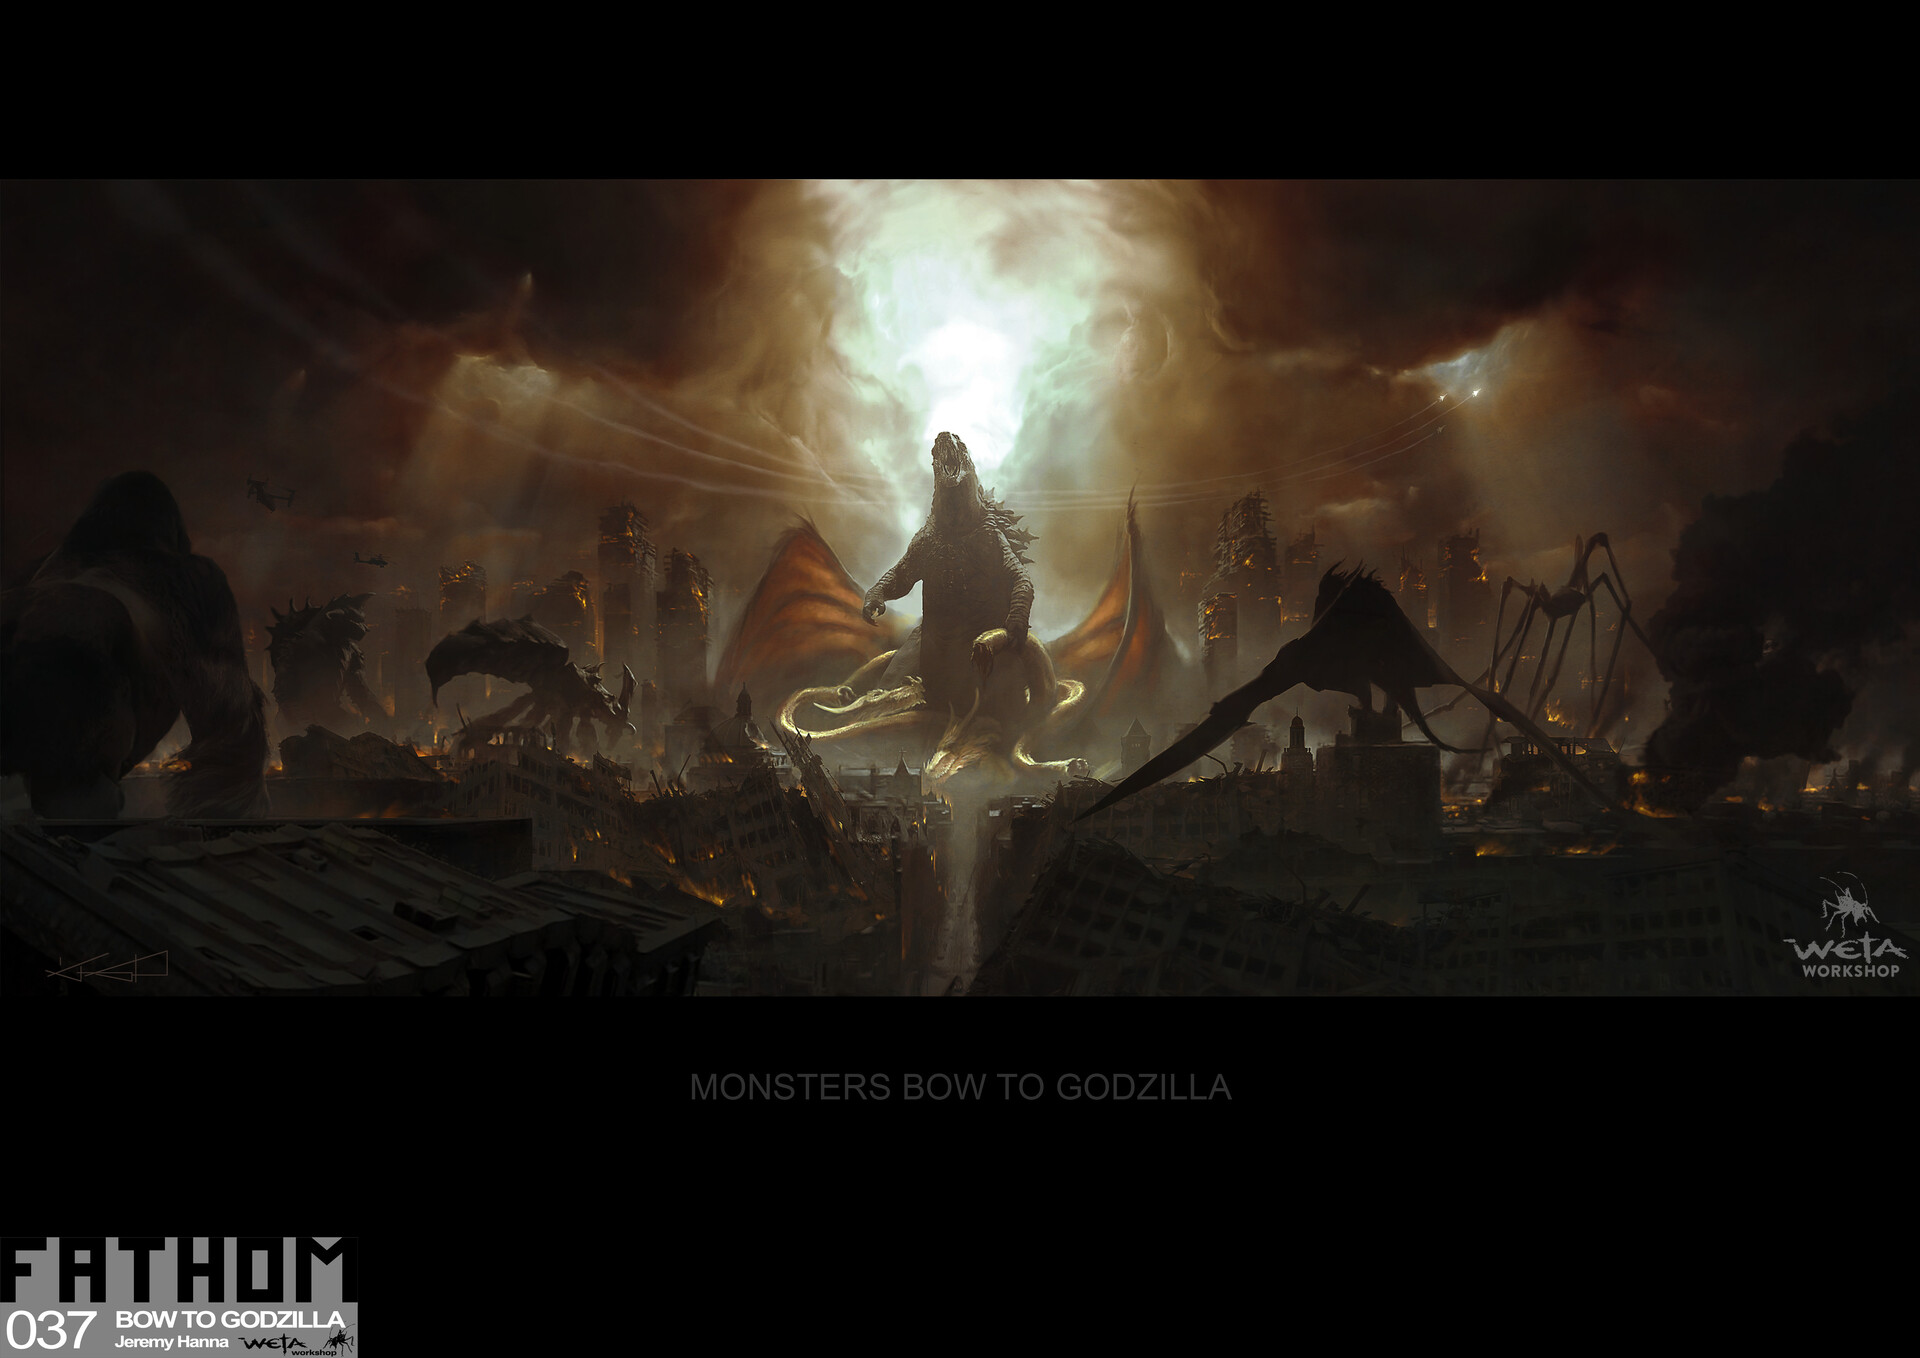 Godzilla 2 concept art by WETA